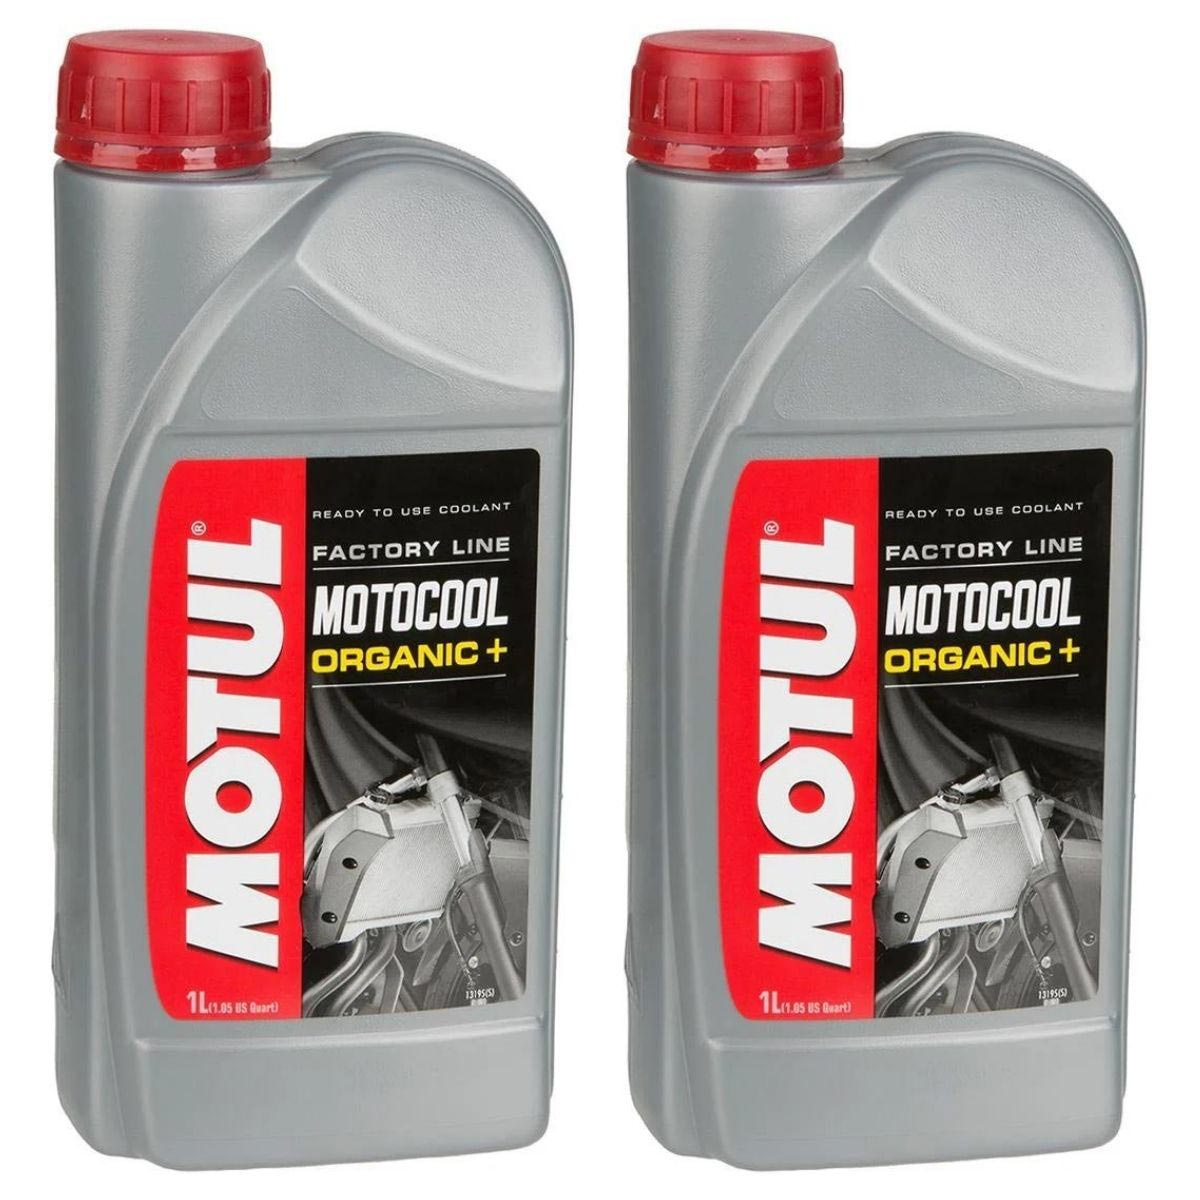 Motul Coolant Factory Line Motocool Set of 2, 1 L each